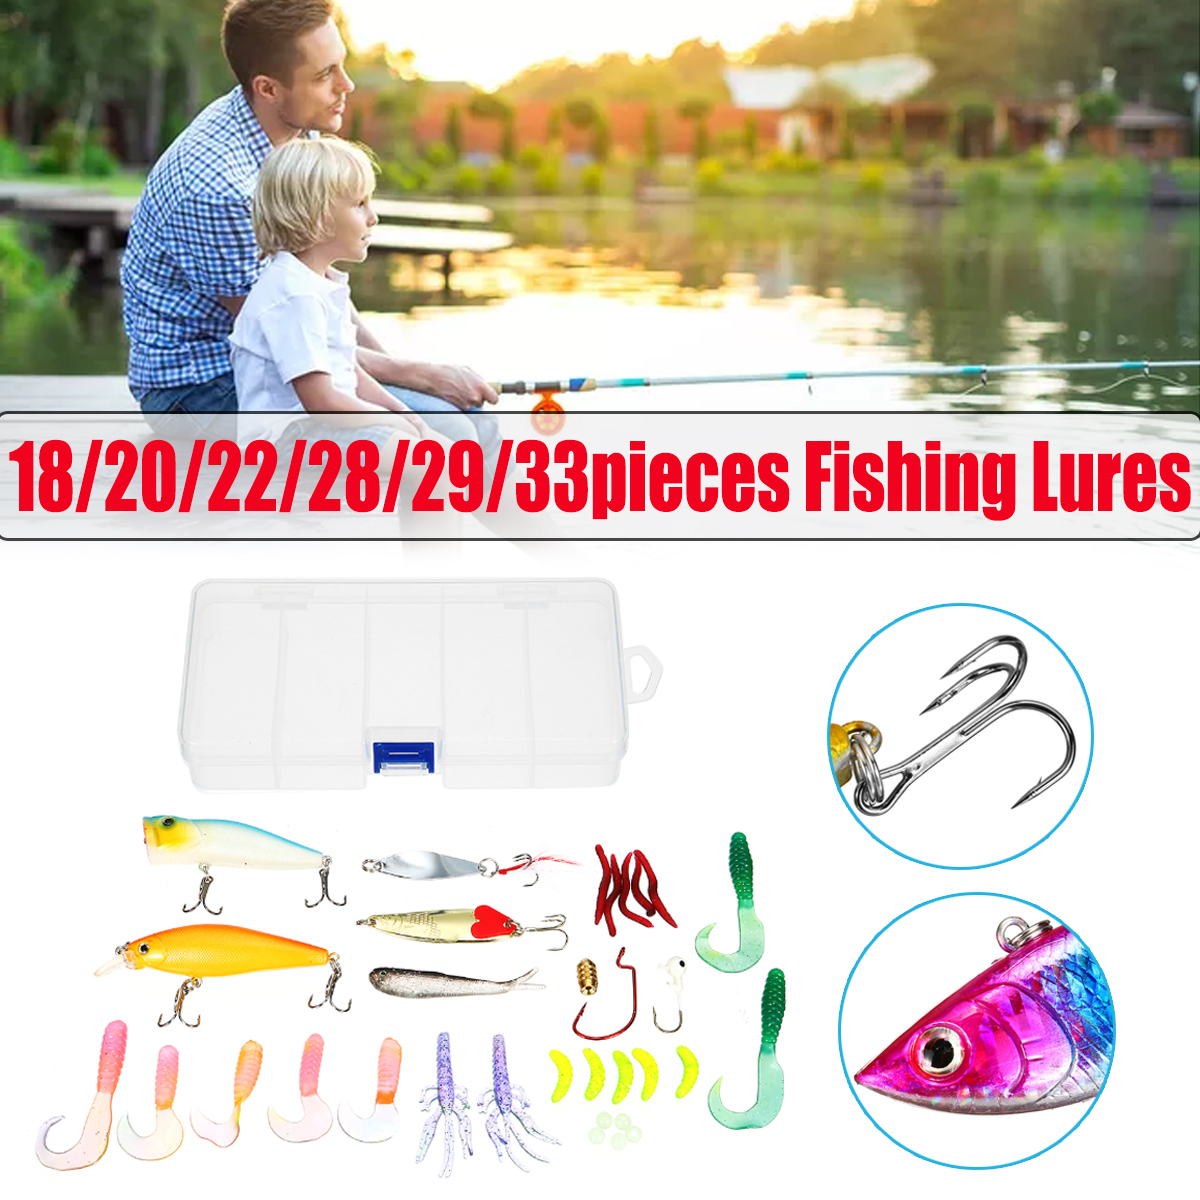 ZANLURE-182022282933-Pcs-Fishing-Lure-Set-Fish-Bait-And-Fish-Hook-Set-Multifunctional-Fishing-Access-1809823-2